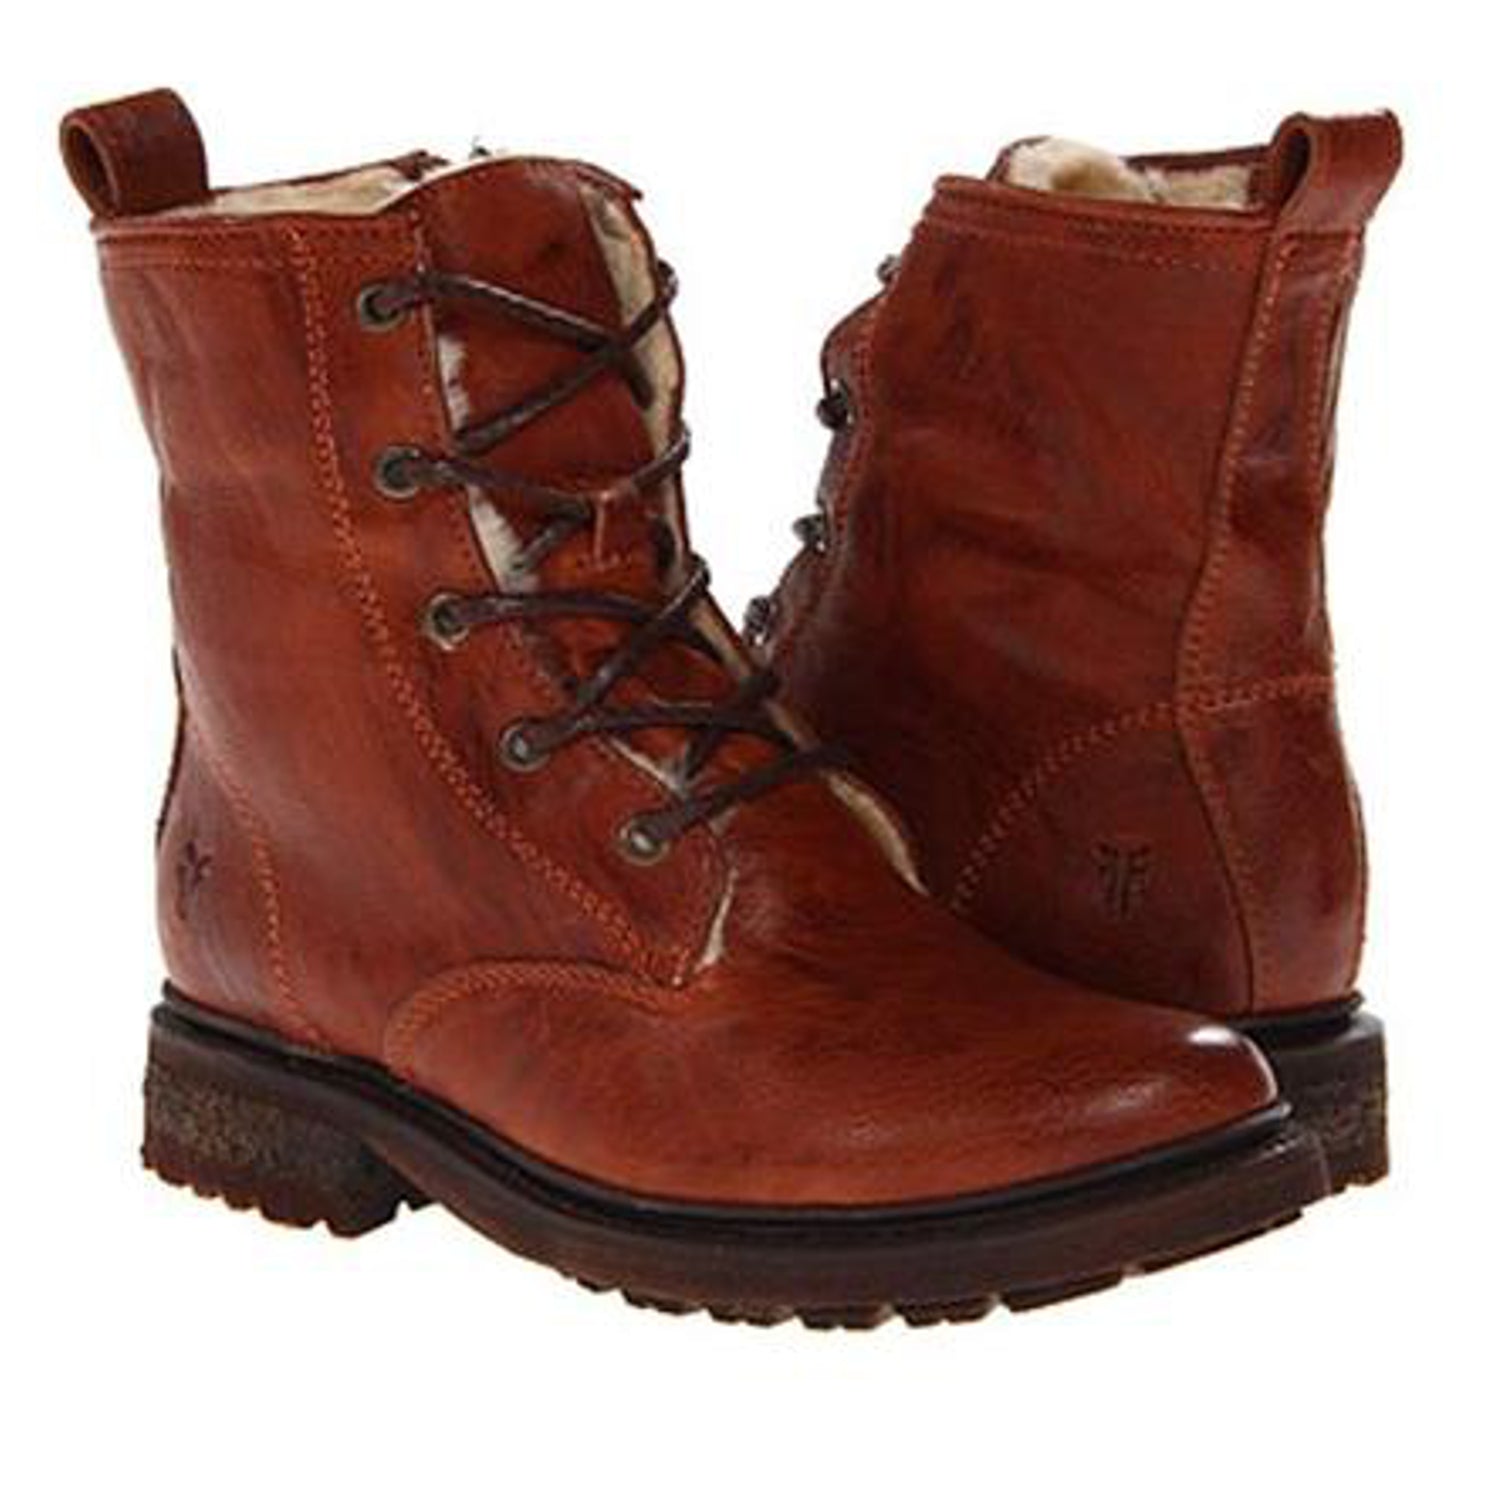 frye boots on sale womens